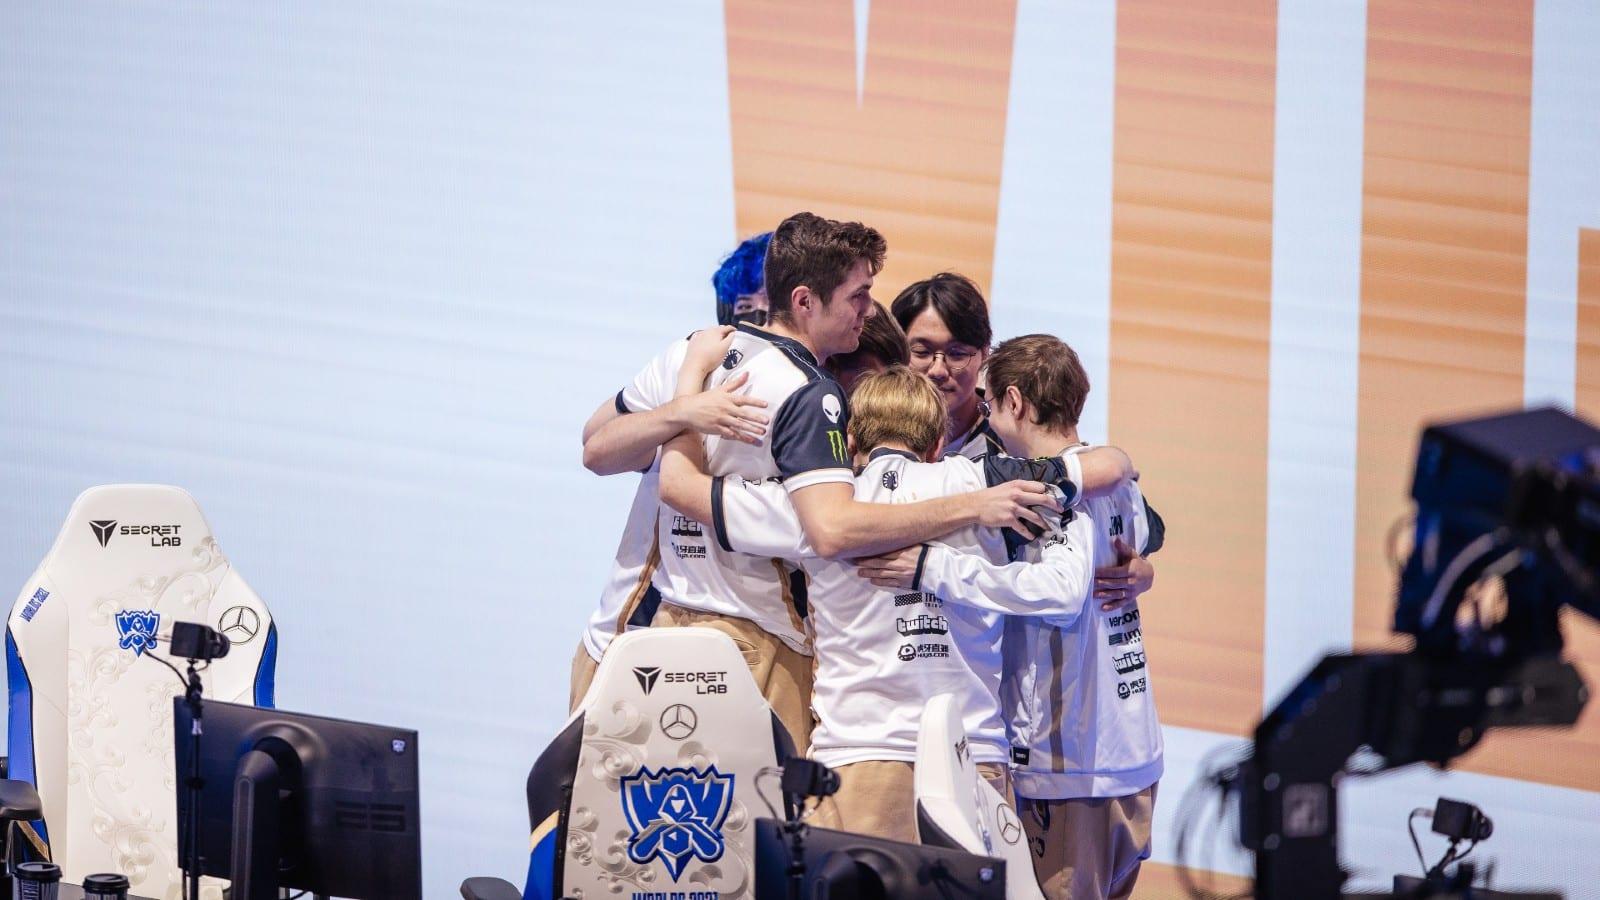 Team Liquid shares a group hug at Worlds 2021